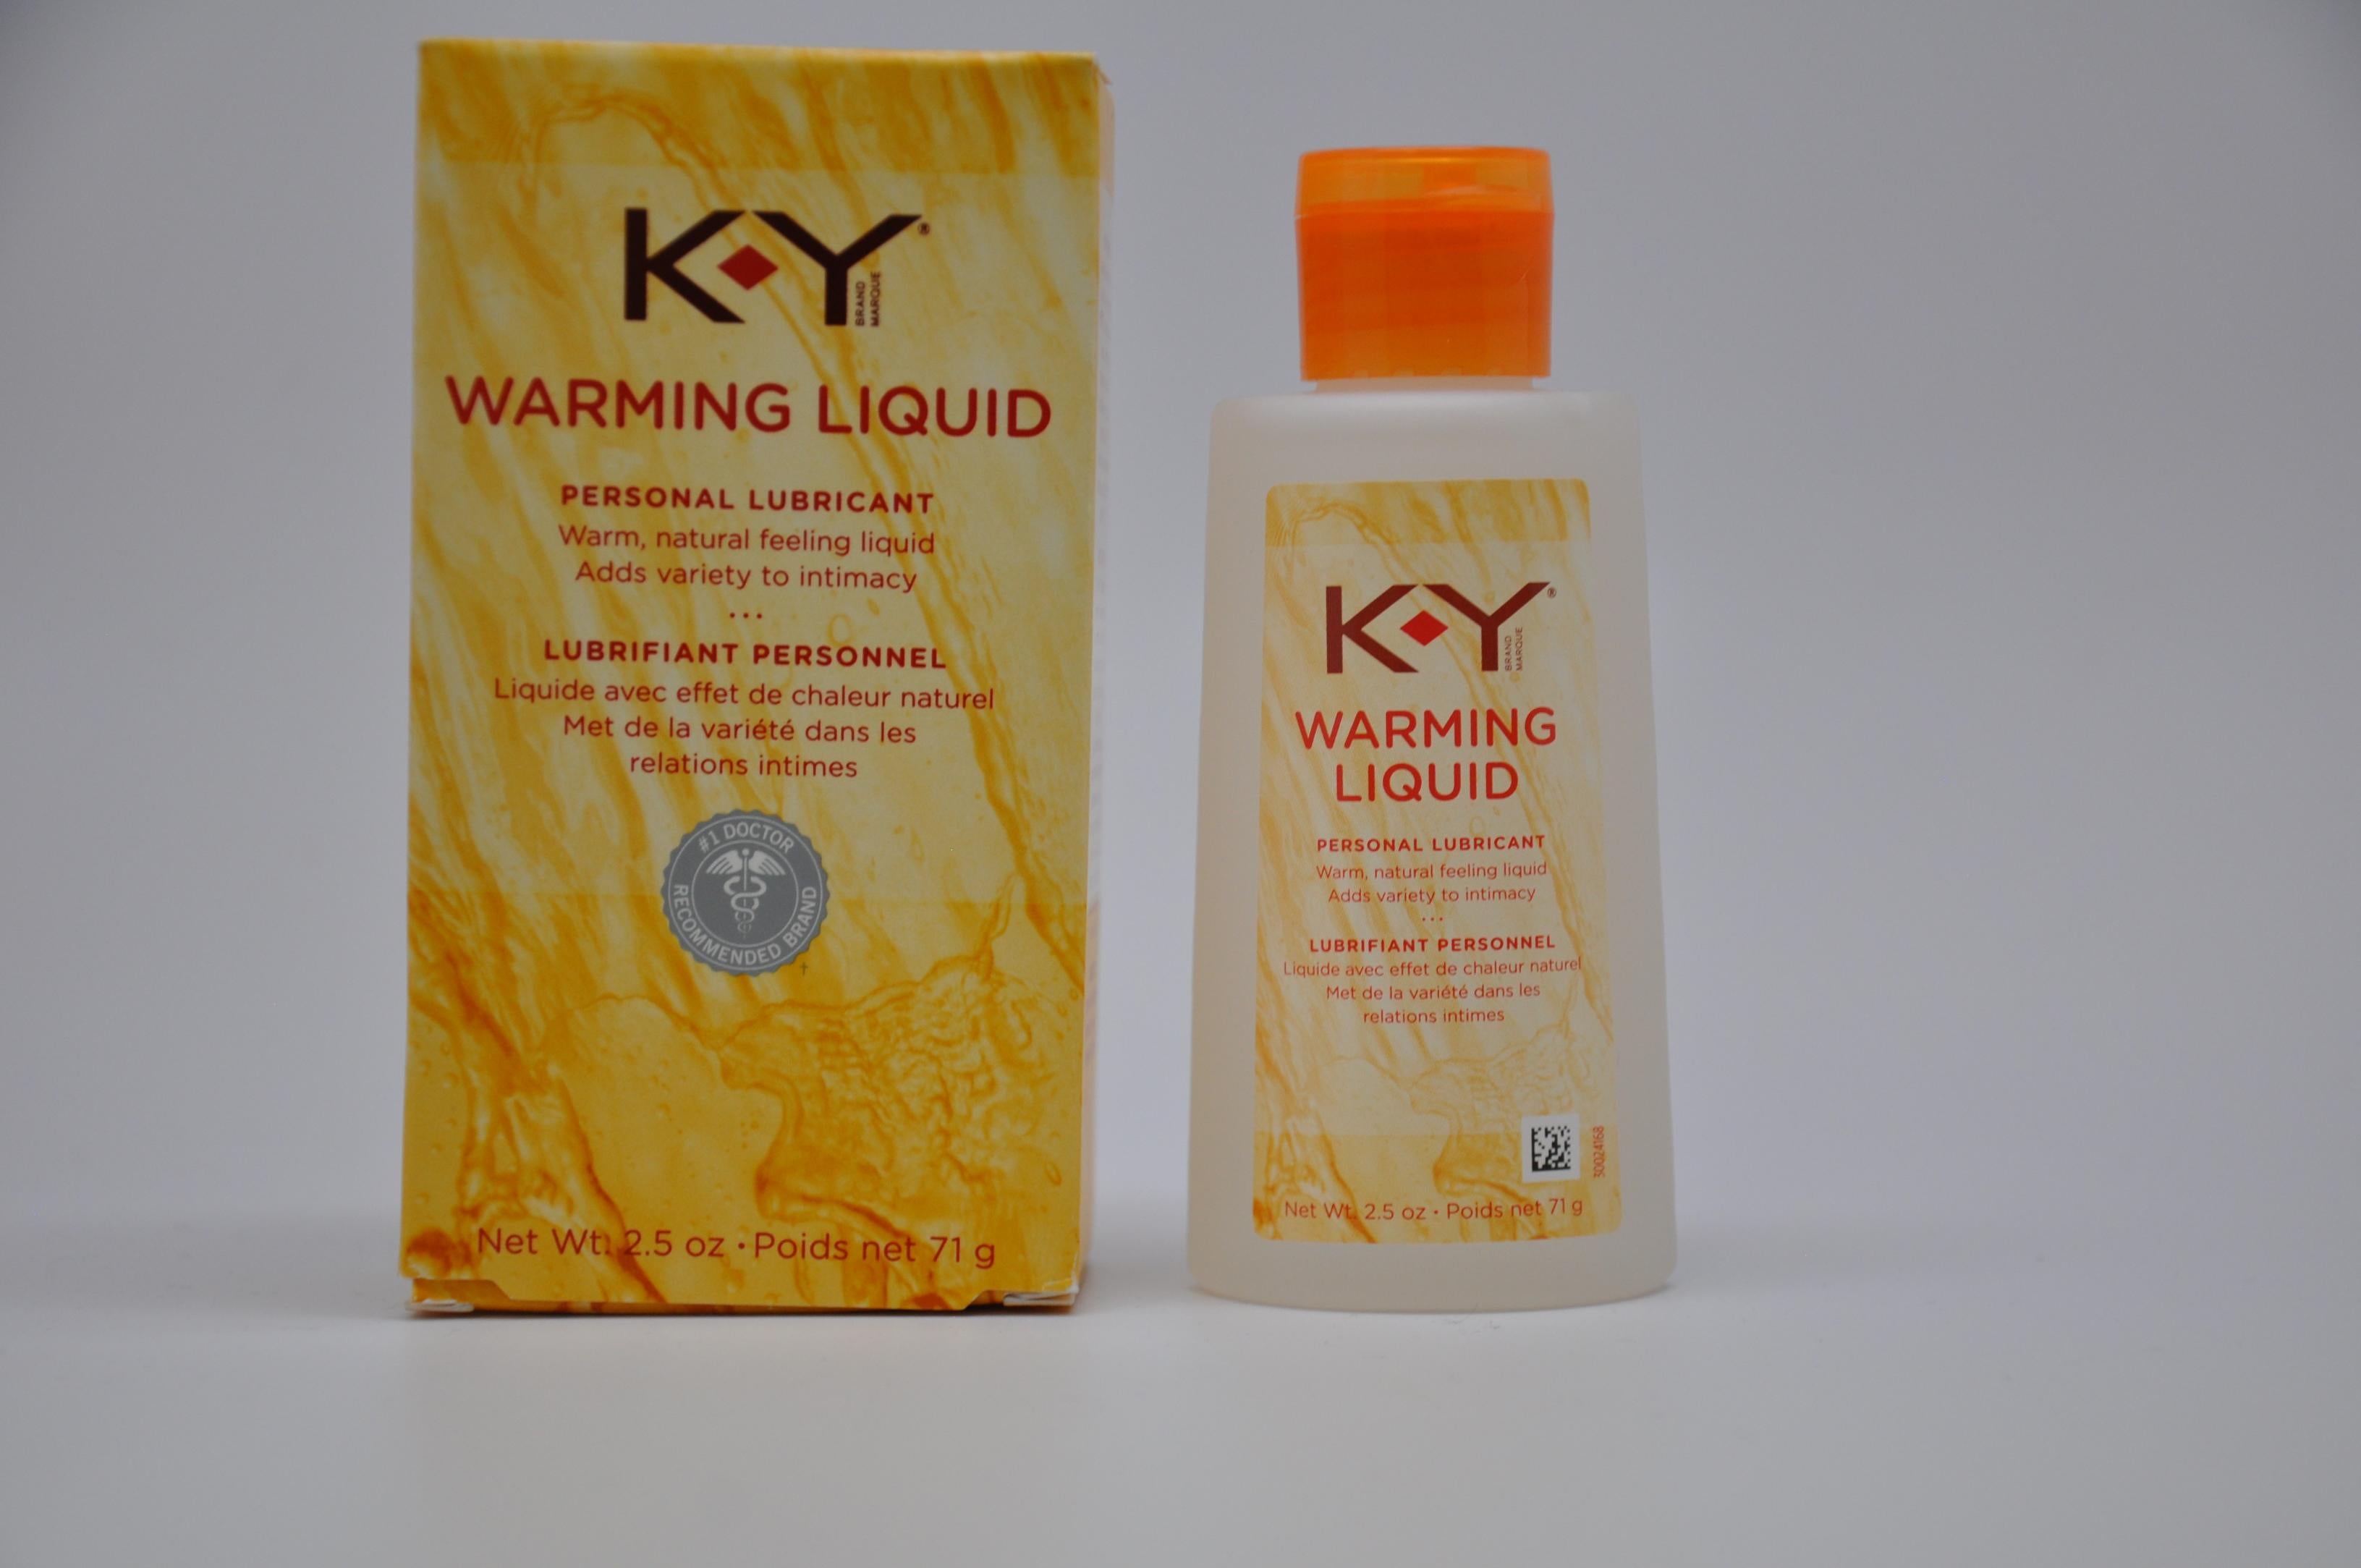 K-y Warming Liquid Paradise Products